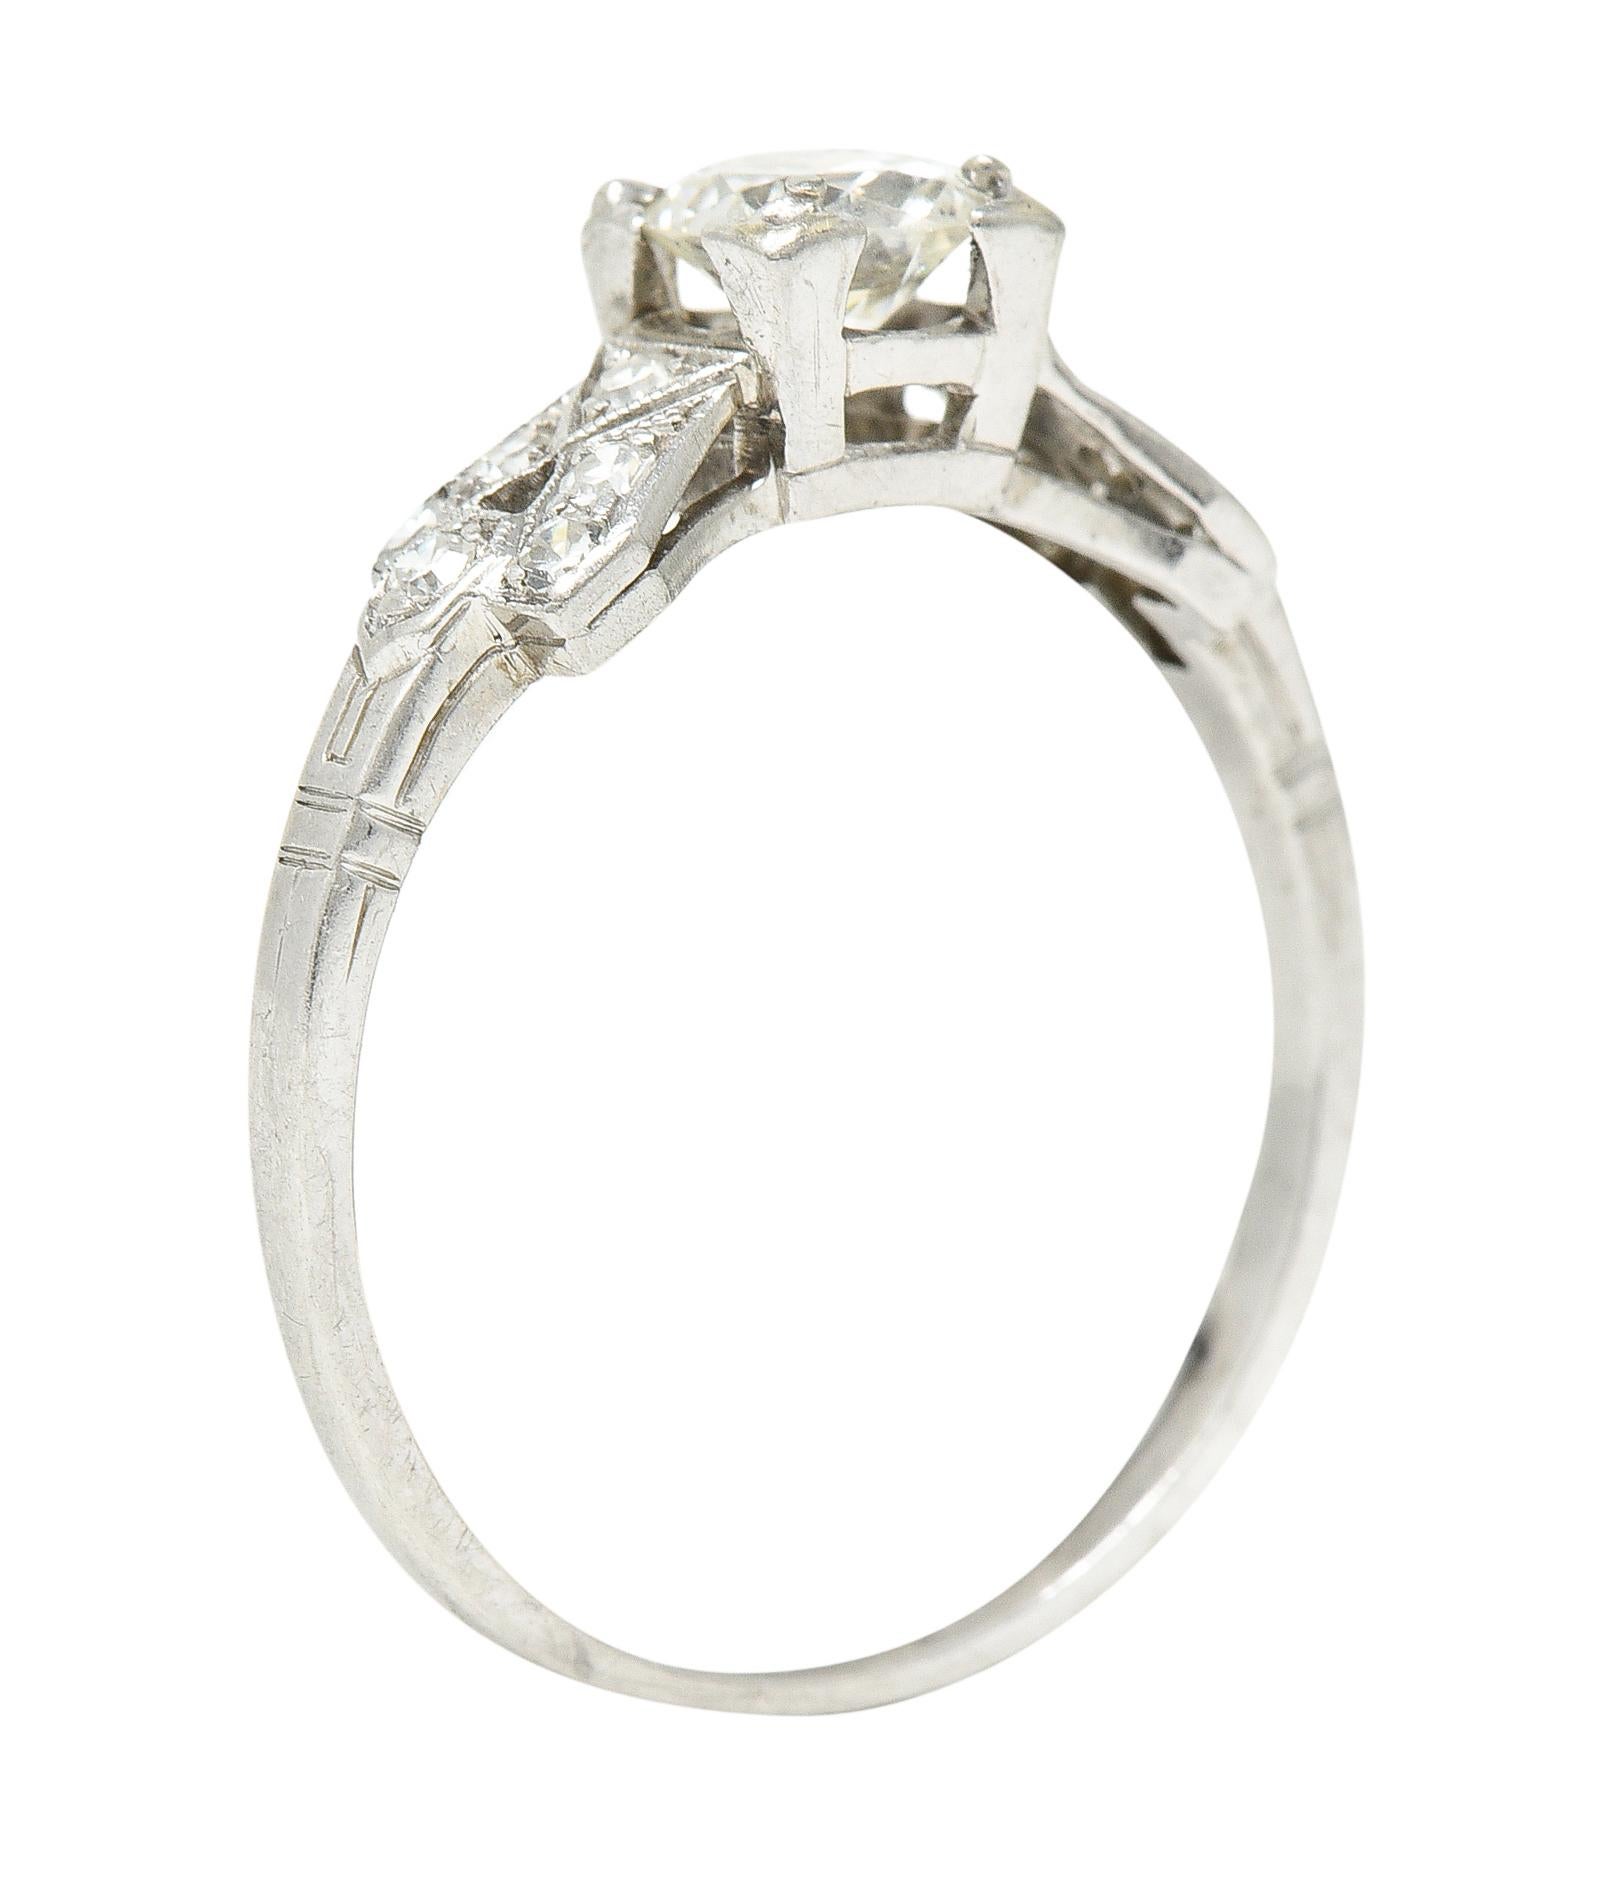 Late Art Deco 0.64 Carat Transitional Cut Diamond Platinum Engagement Ring For Sale 6